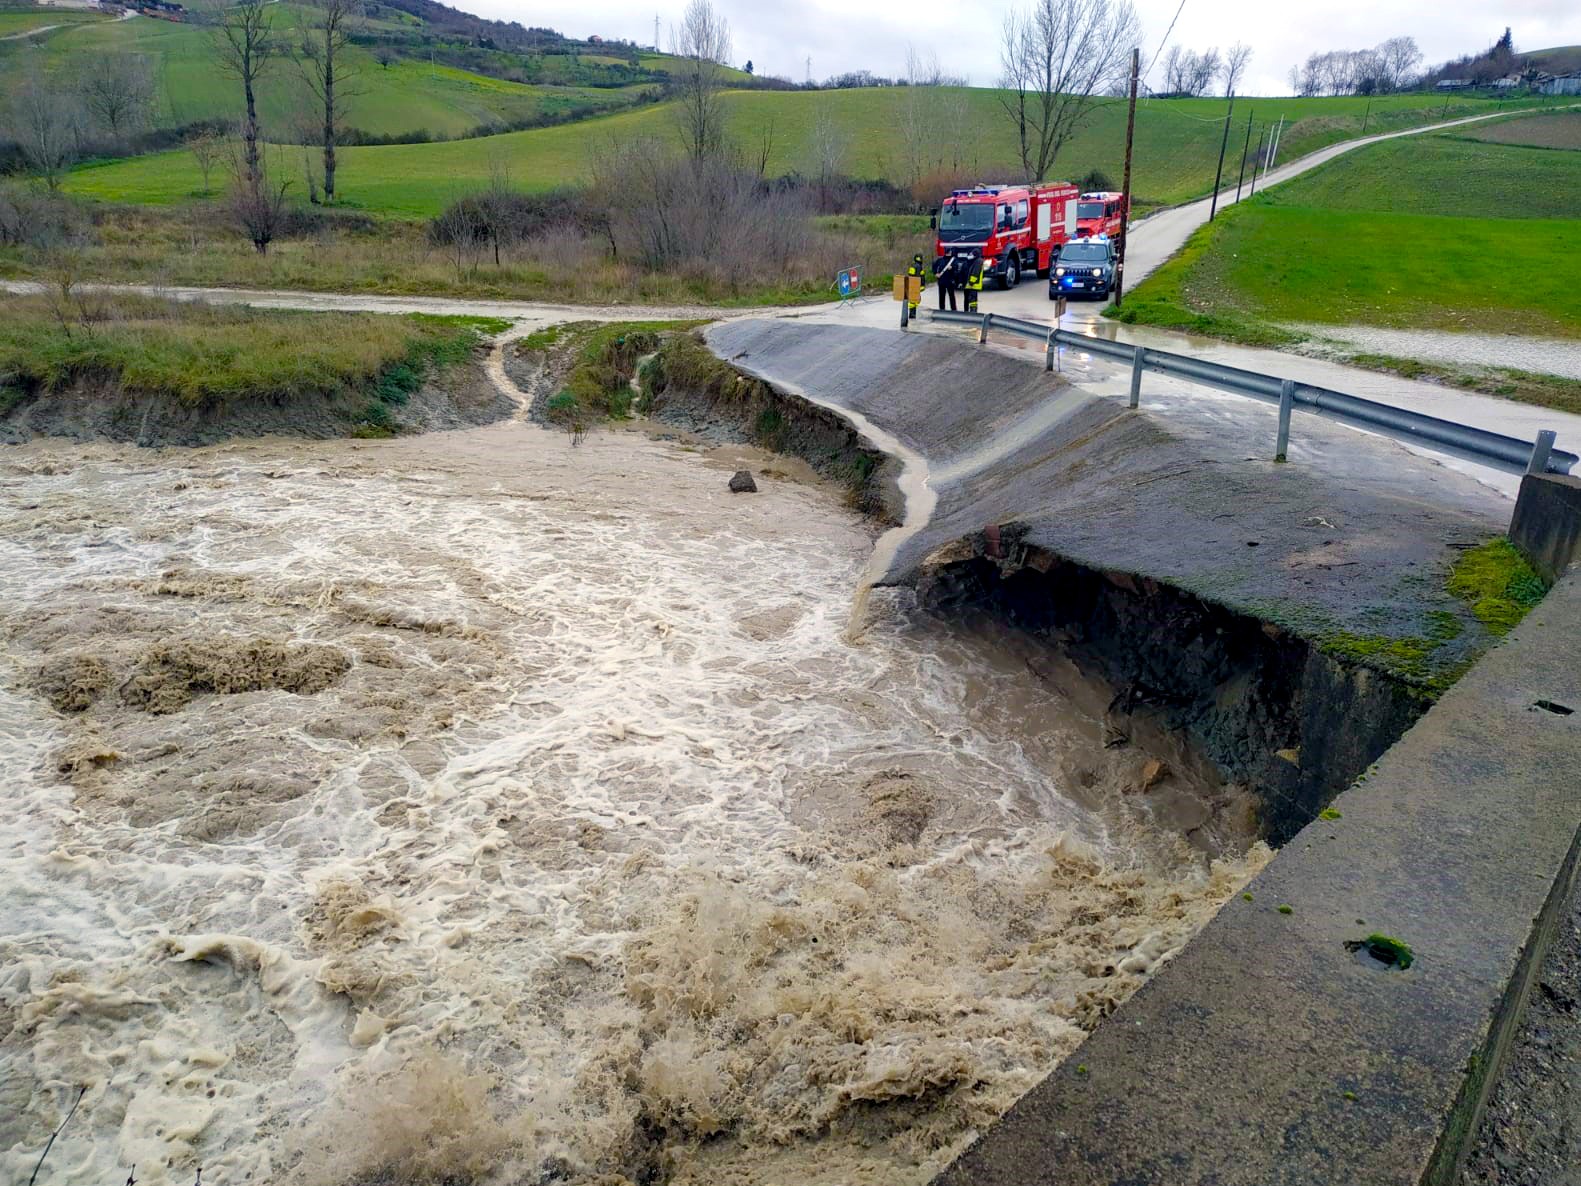 Maltempo: straripa il torrente tra Zungoli, Villanova e Flumeri. Frana sulla strada tra Montefusco e S.Paolina